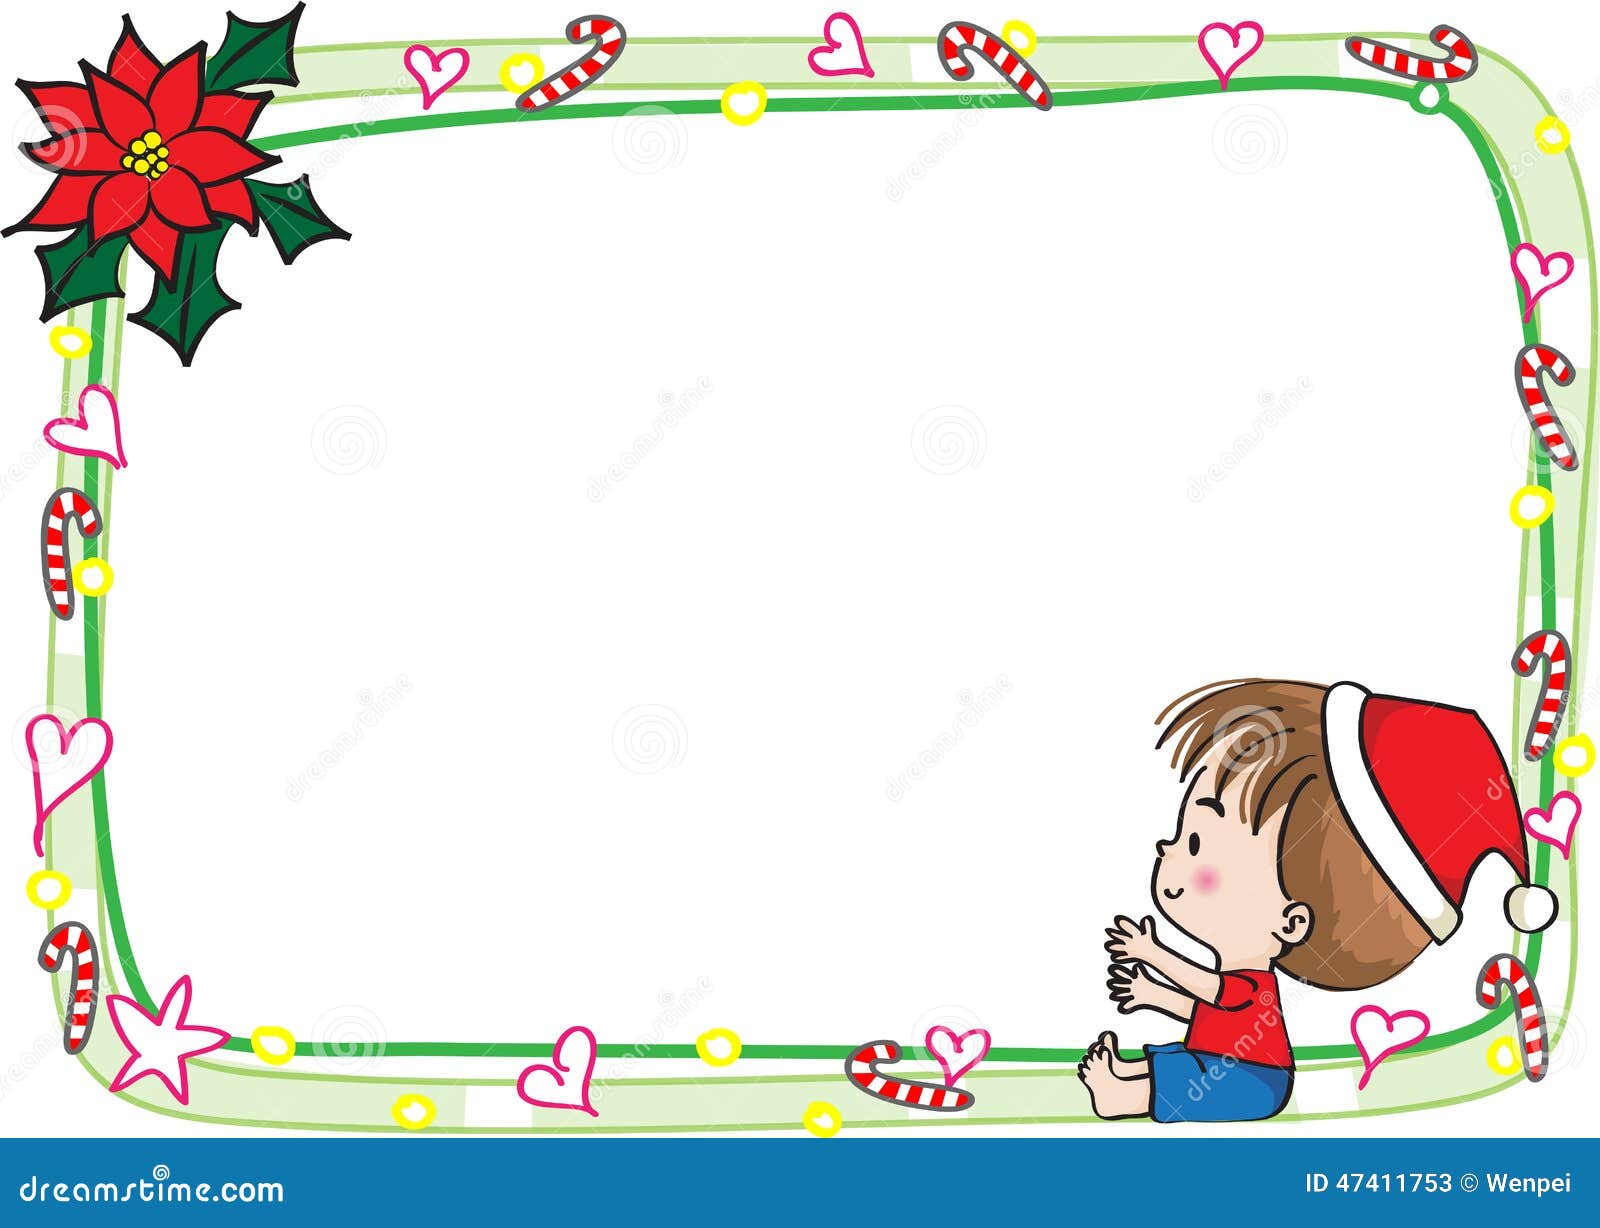 Merry Christmas Card Border Frame Illustration 47411753 Megapixl